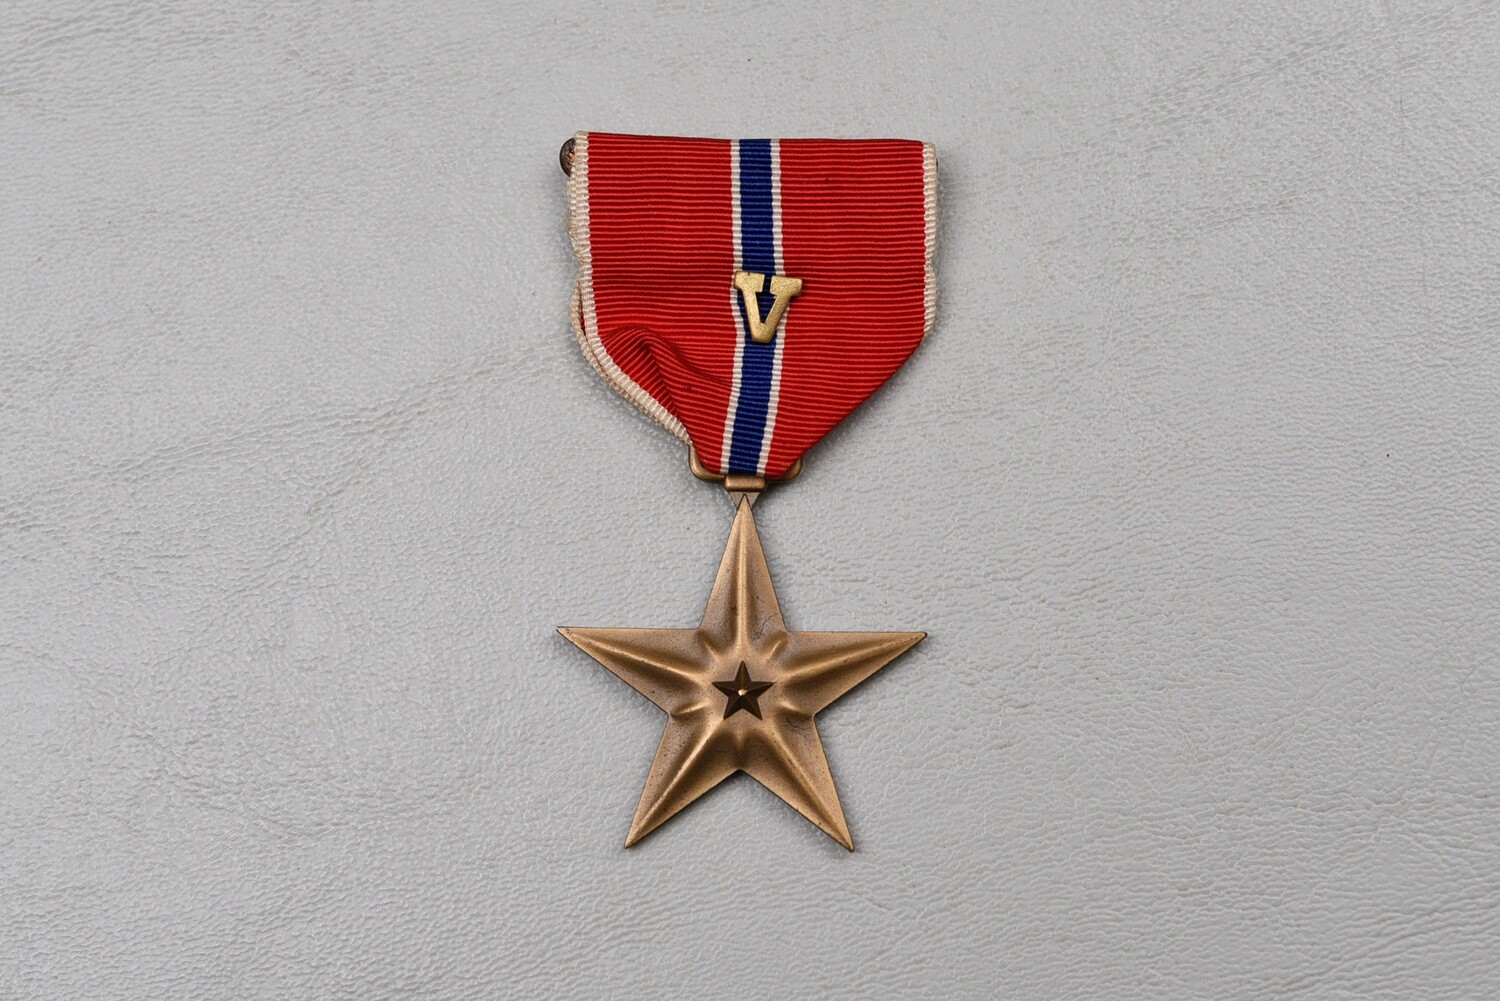 VIETNAM WAR U.S. BRONZE STAR MEDAL AWARDED TO NAVY CORPSMAN – KIA 6 FEB 1968